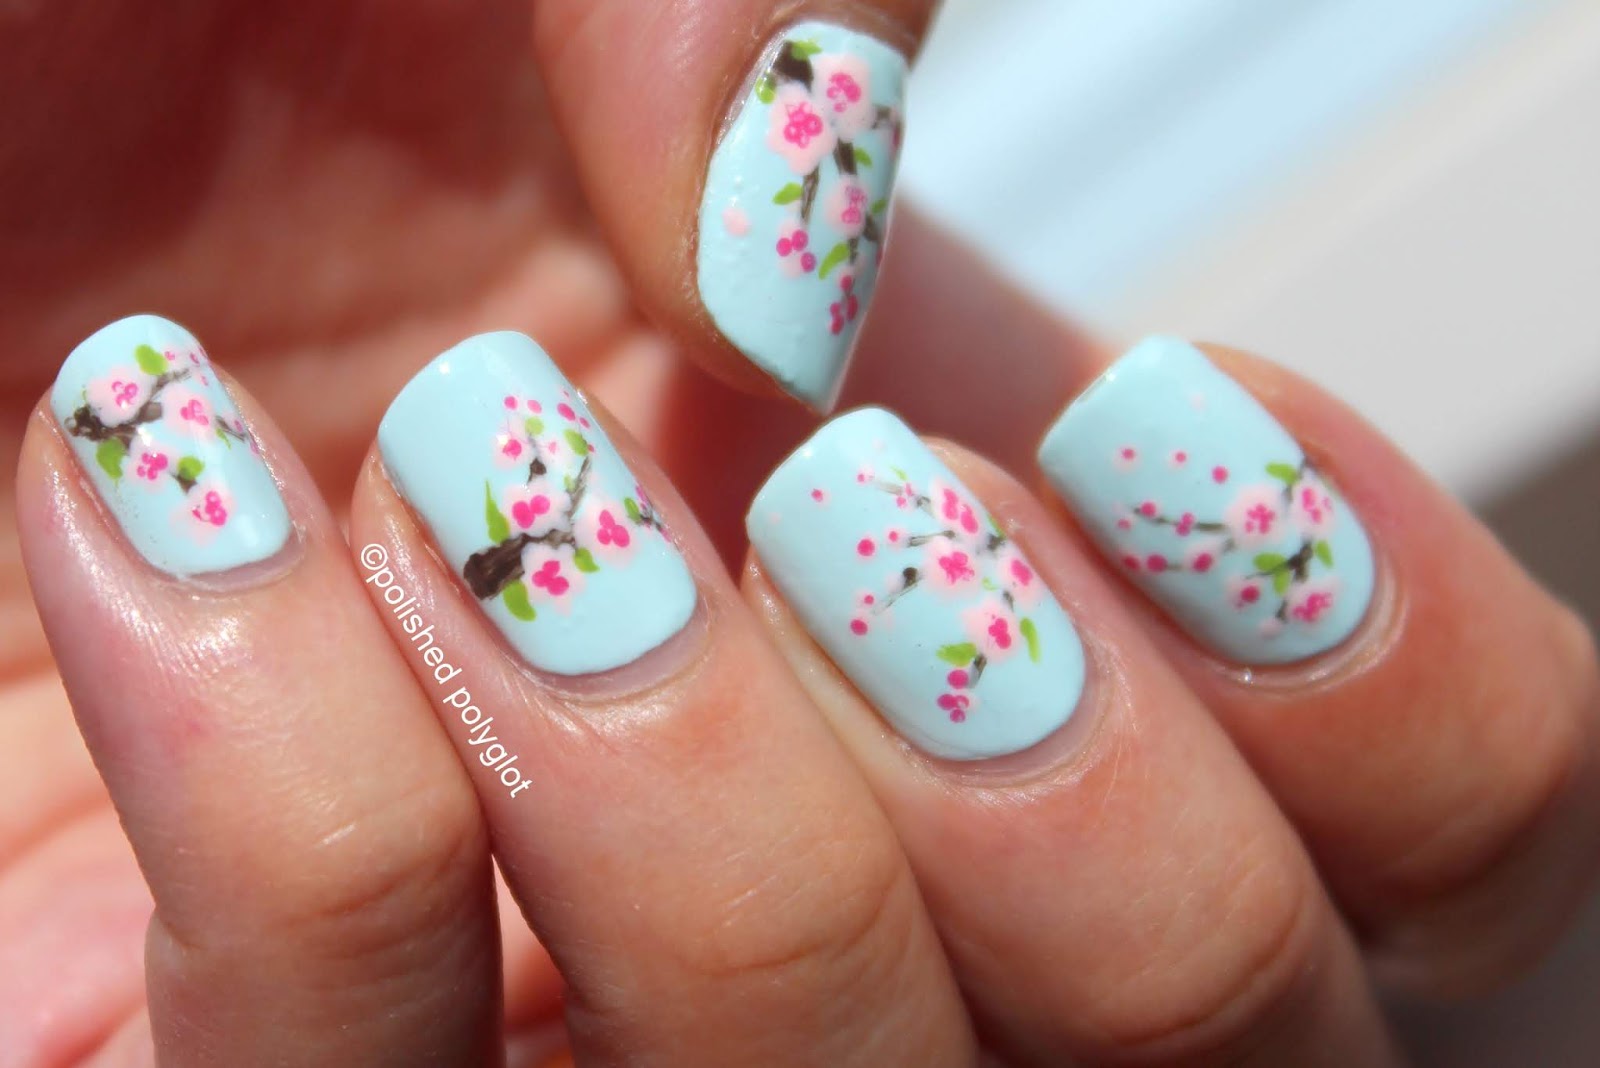 3. Cherry Blossom Nail Design - wide 4